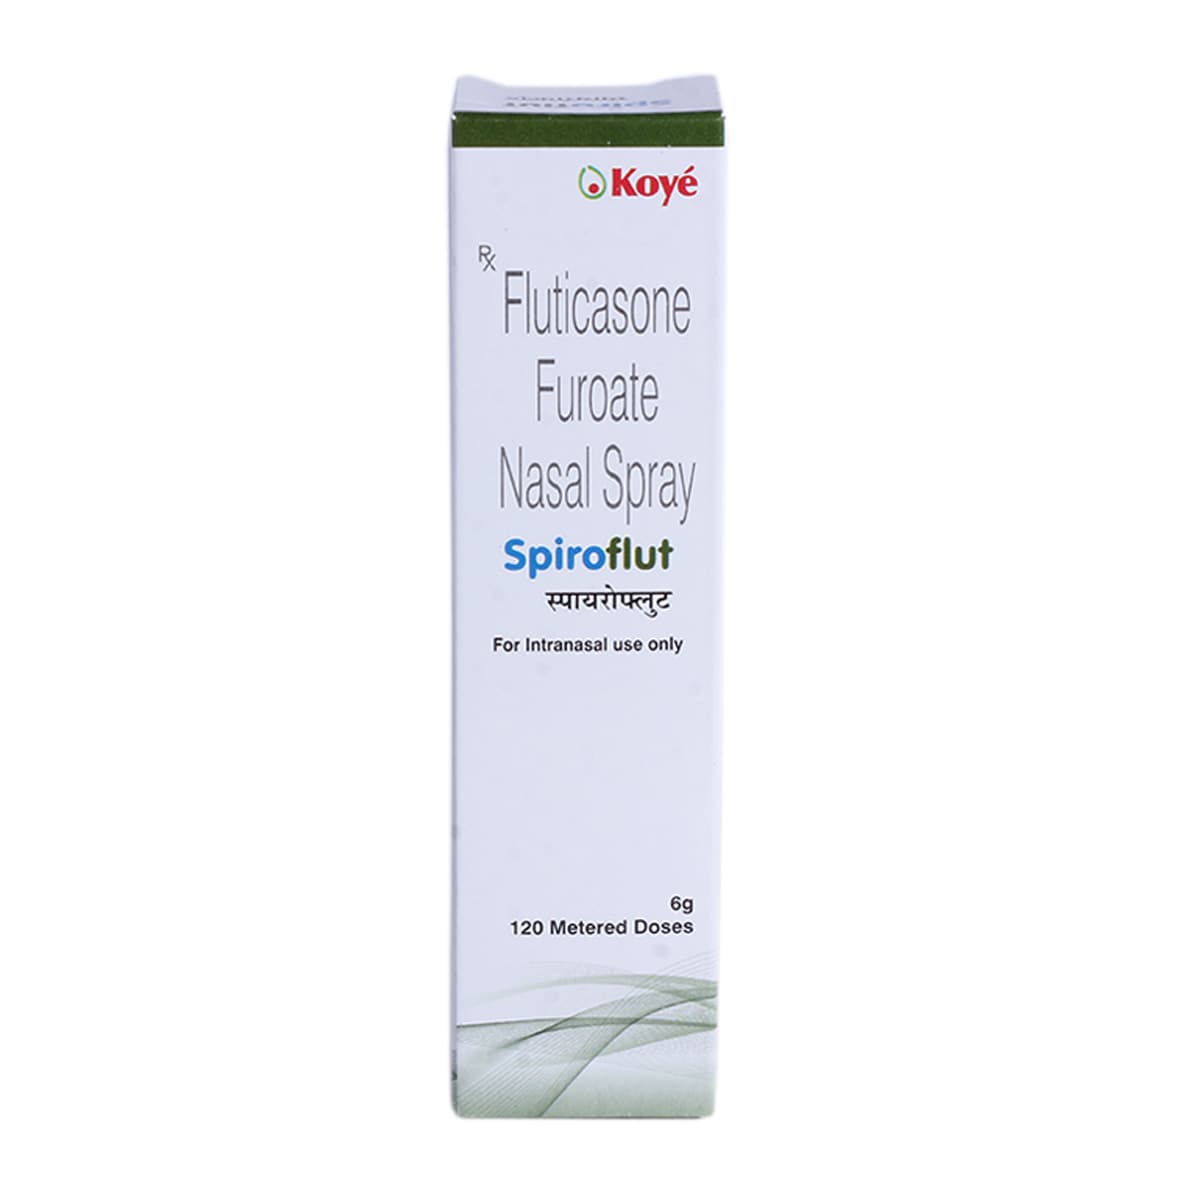 Buy Spiroflut Nasal Spray 6 gm Online